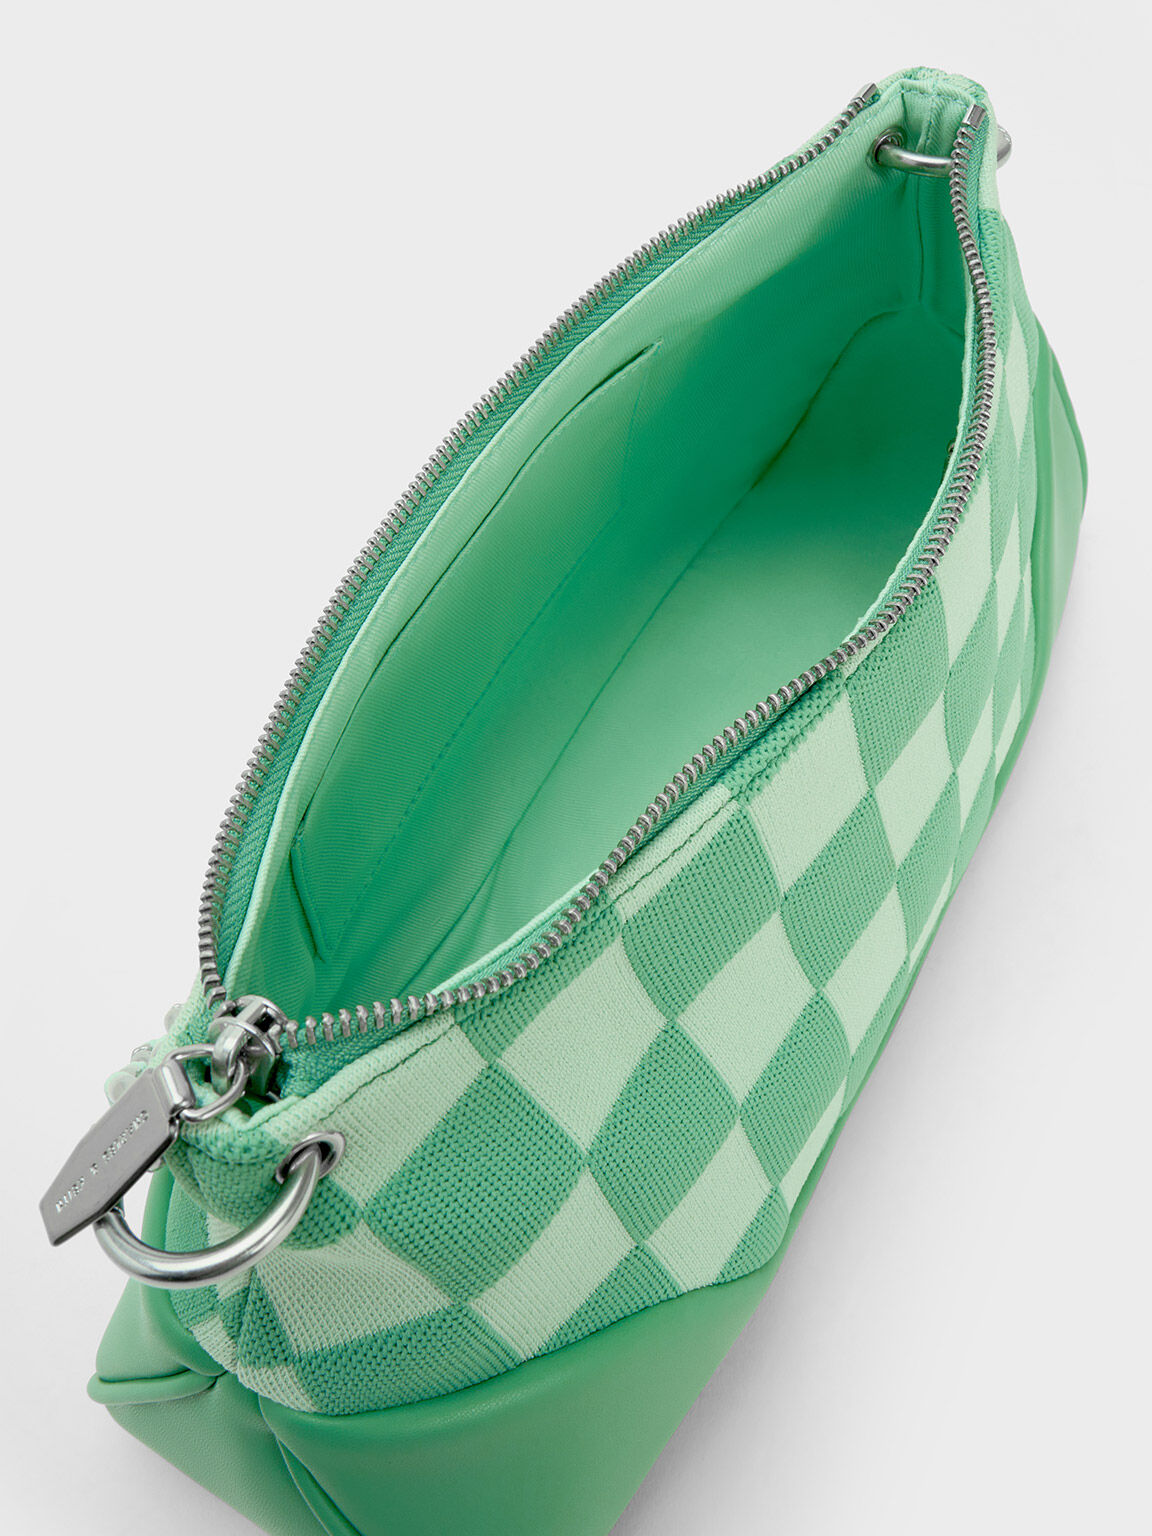 Shiloh Checkerboard Shoulder Bag, Green, hi-res